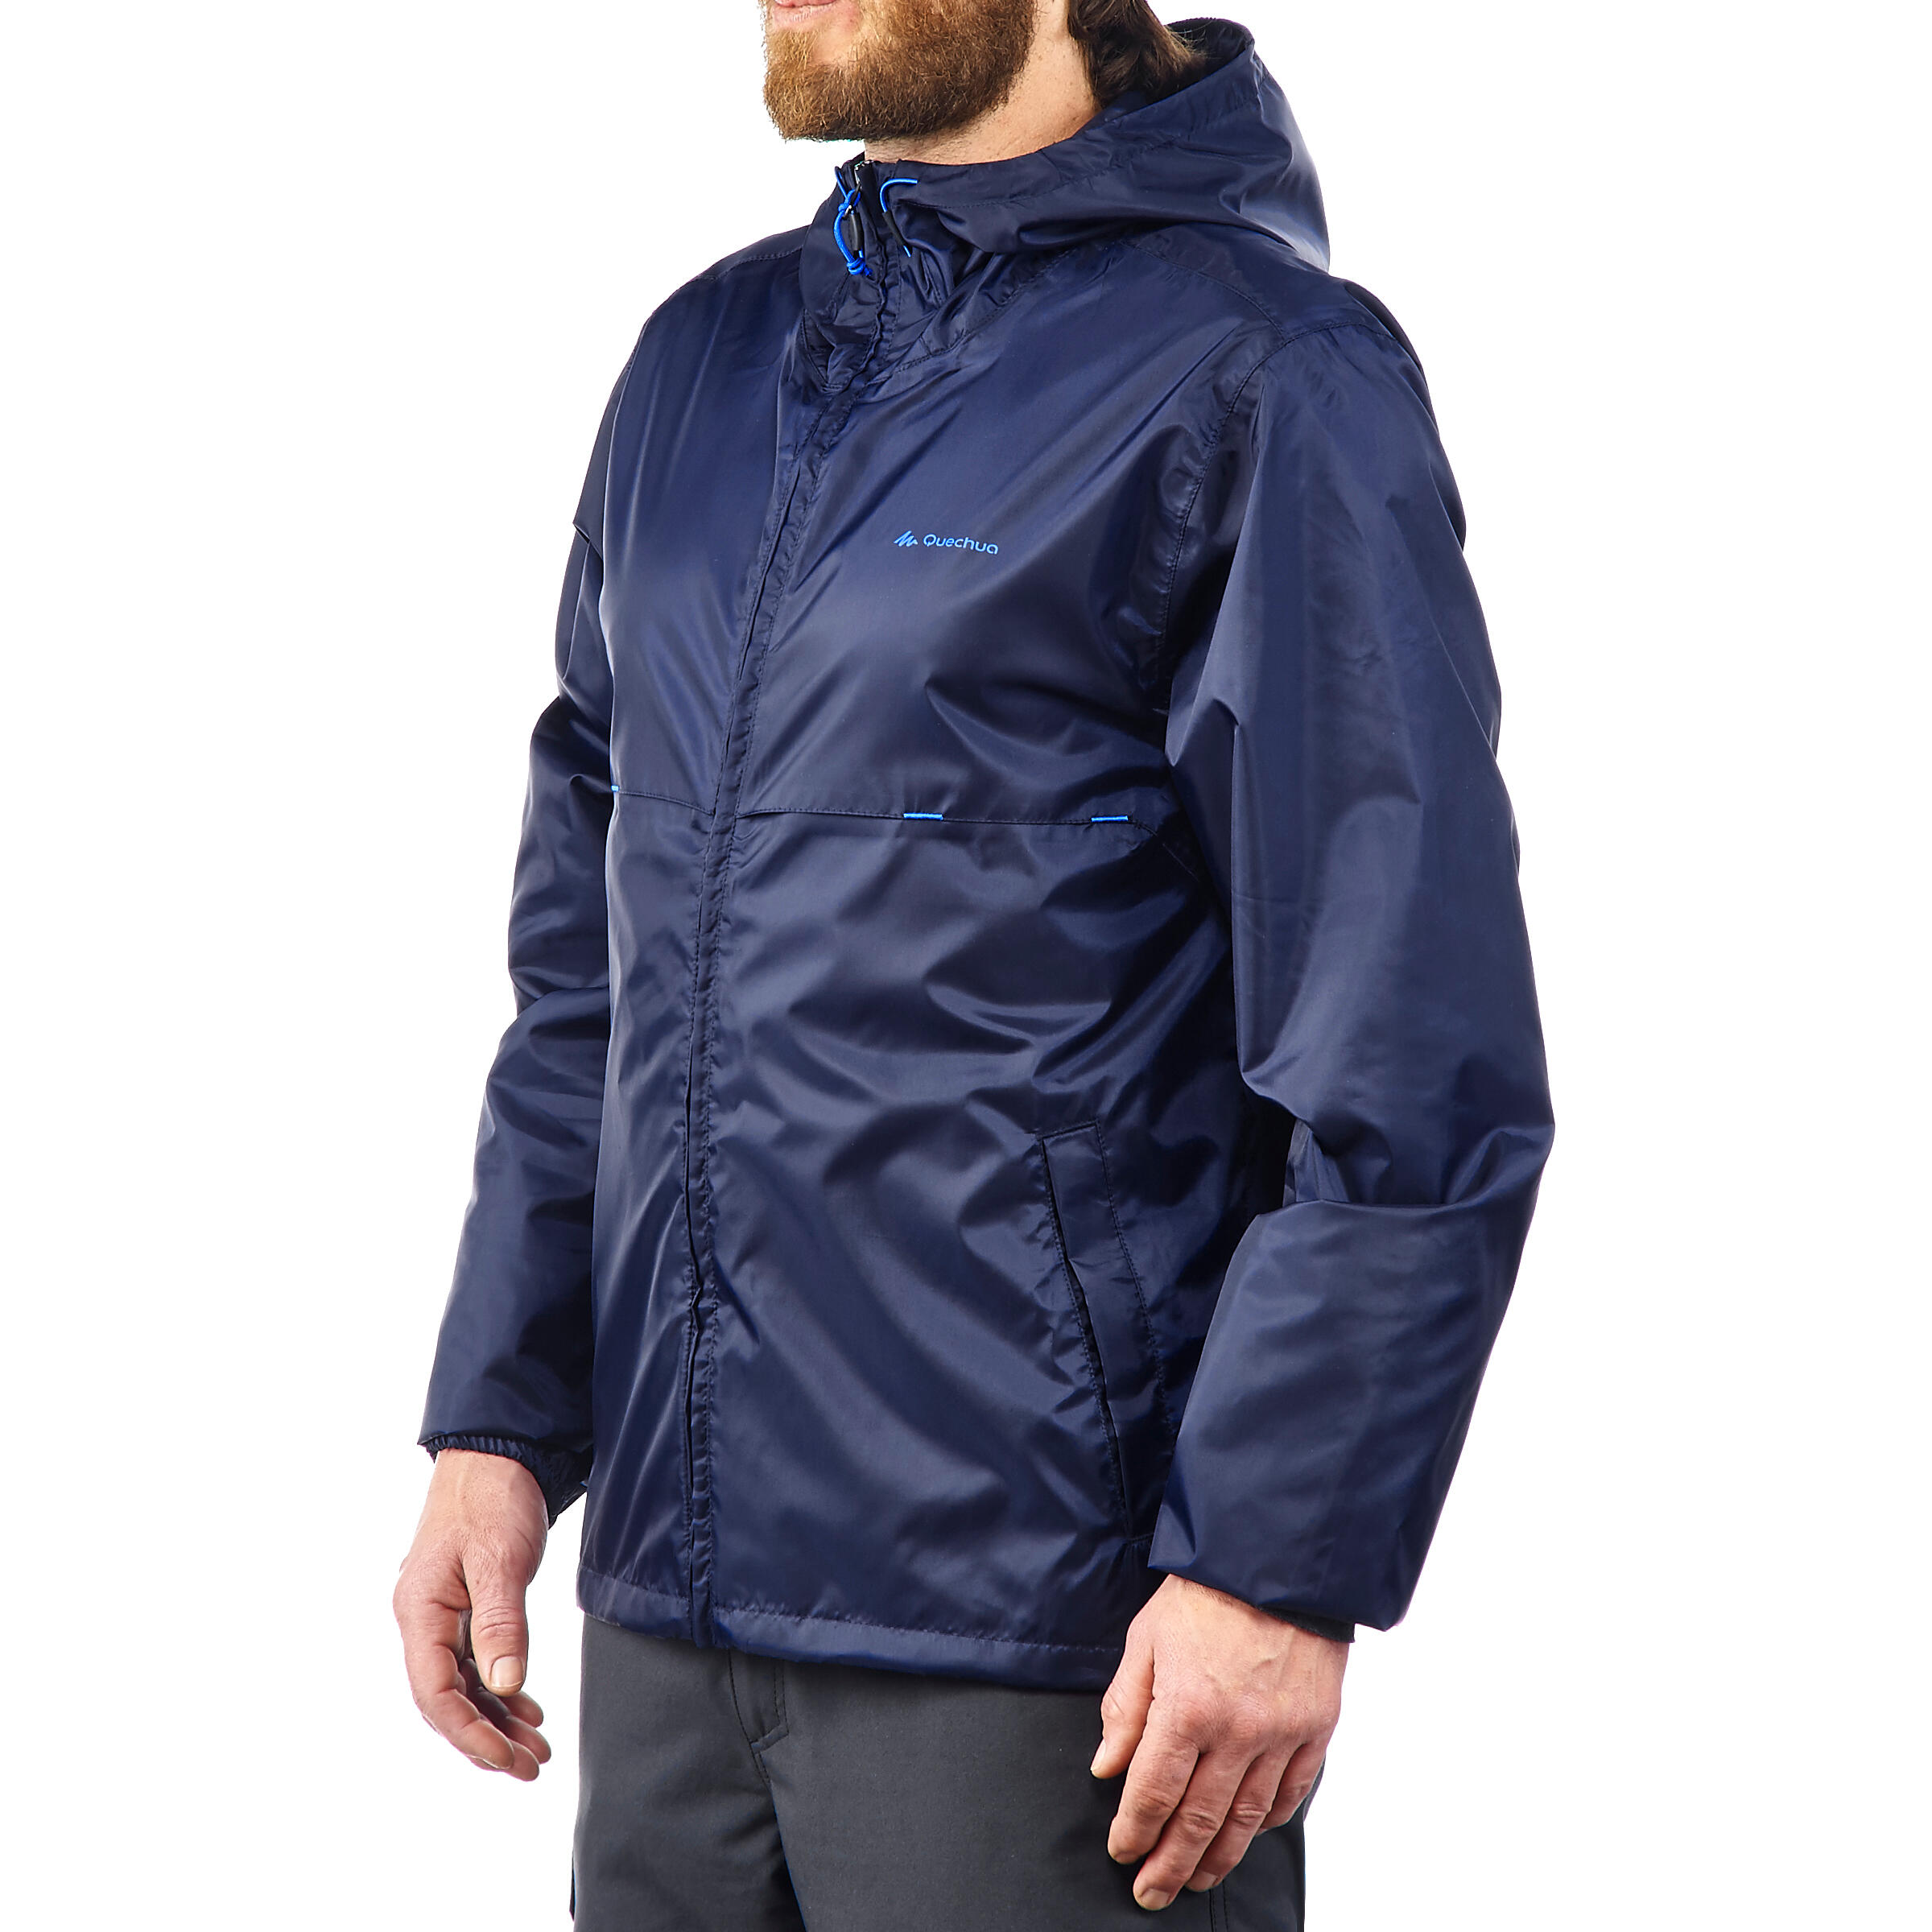 decathlon raincoat online